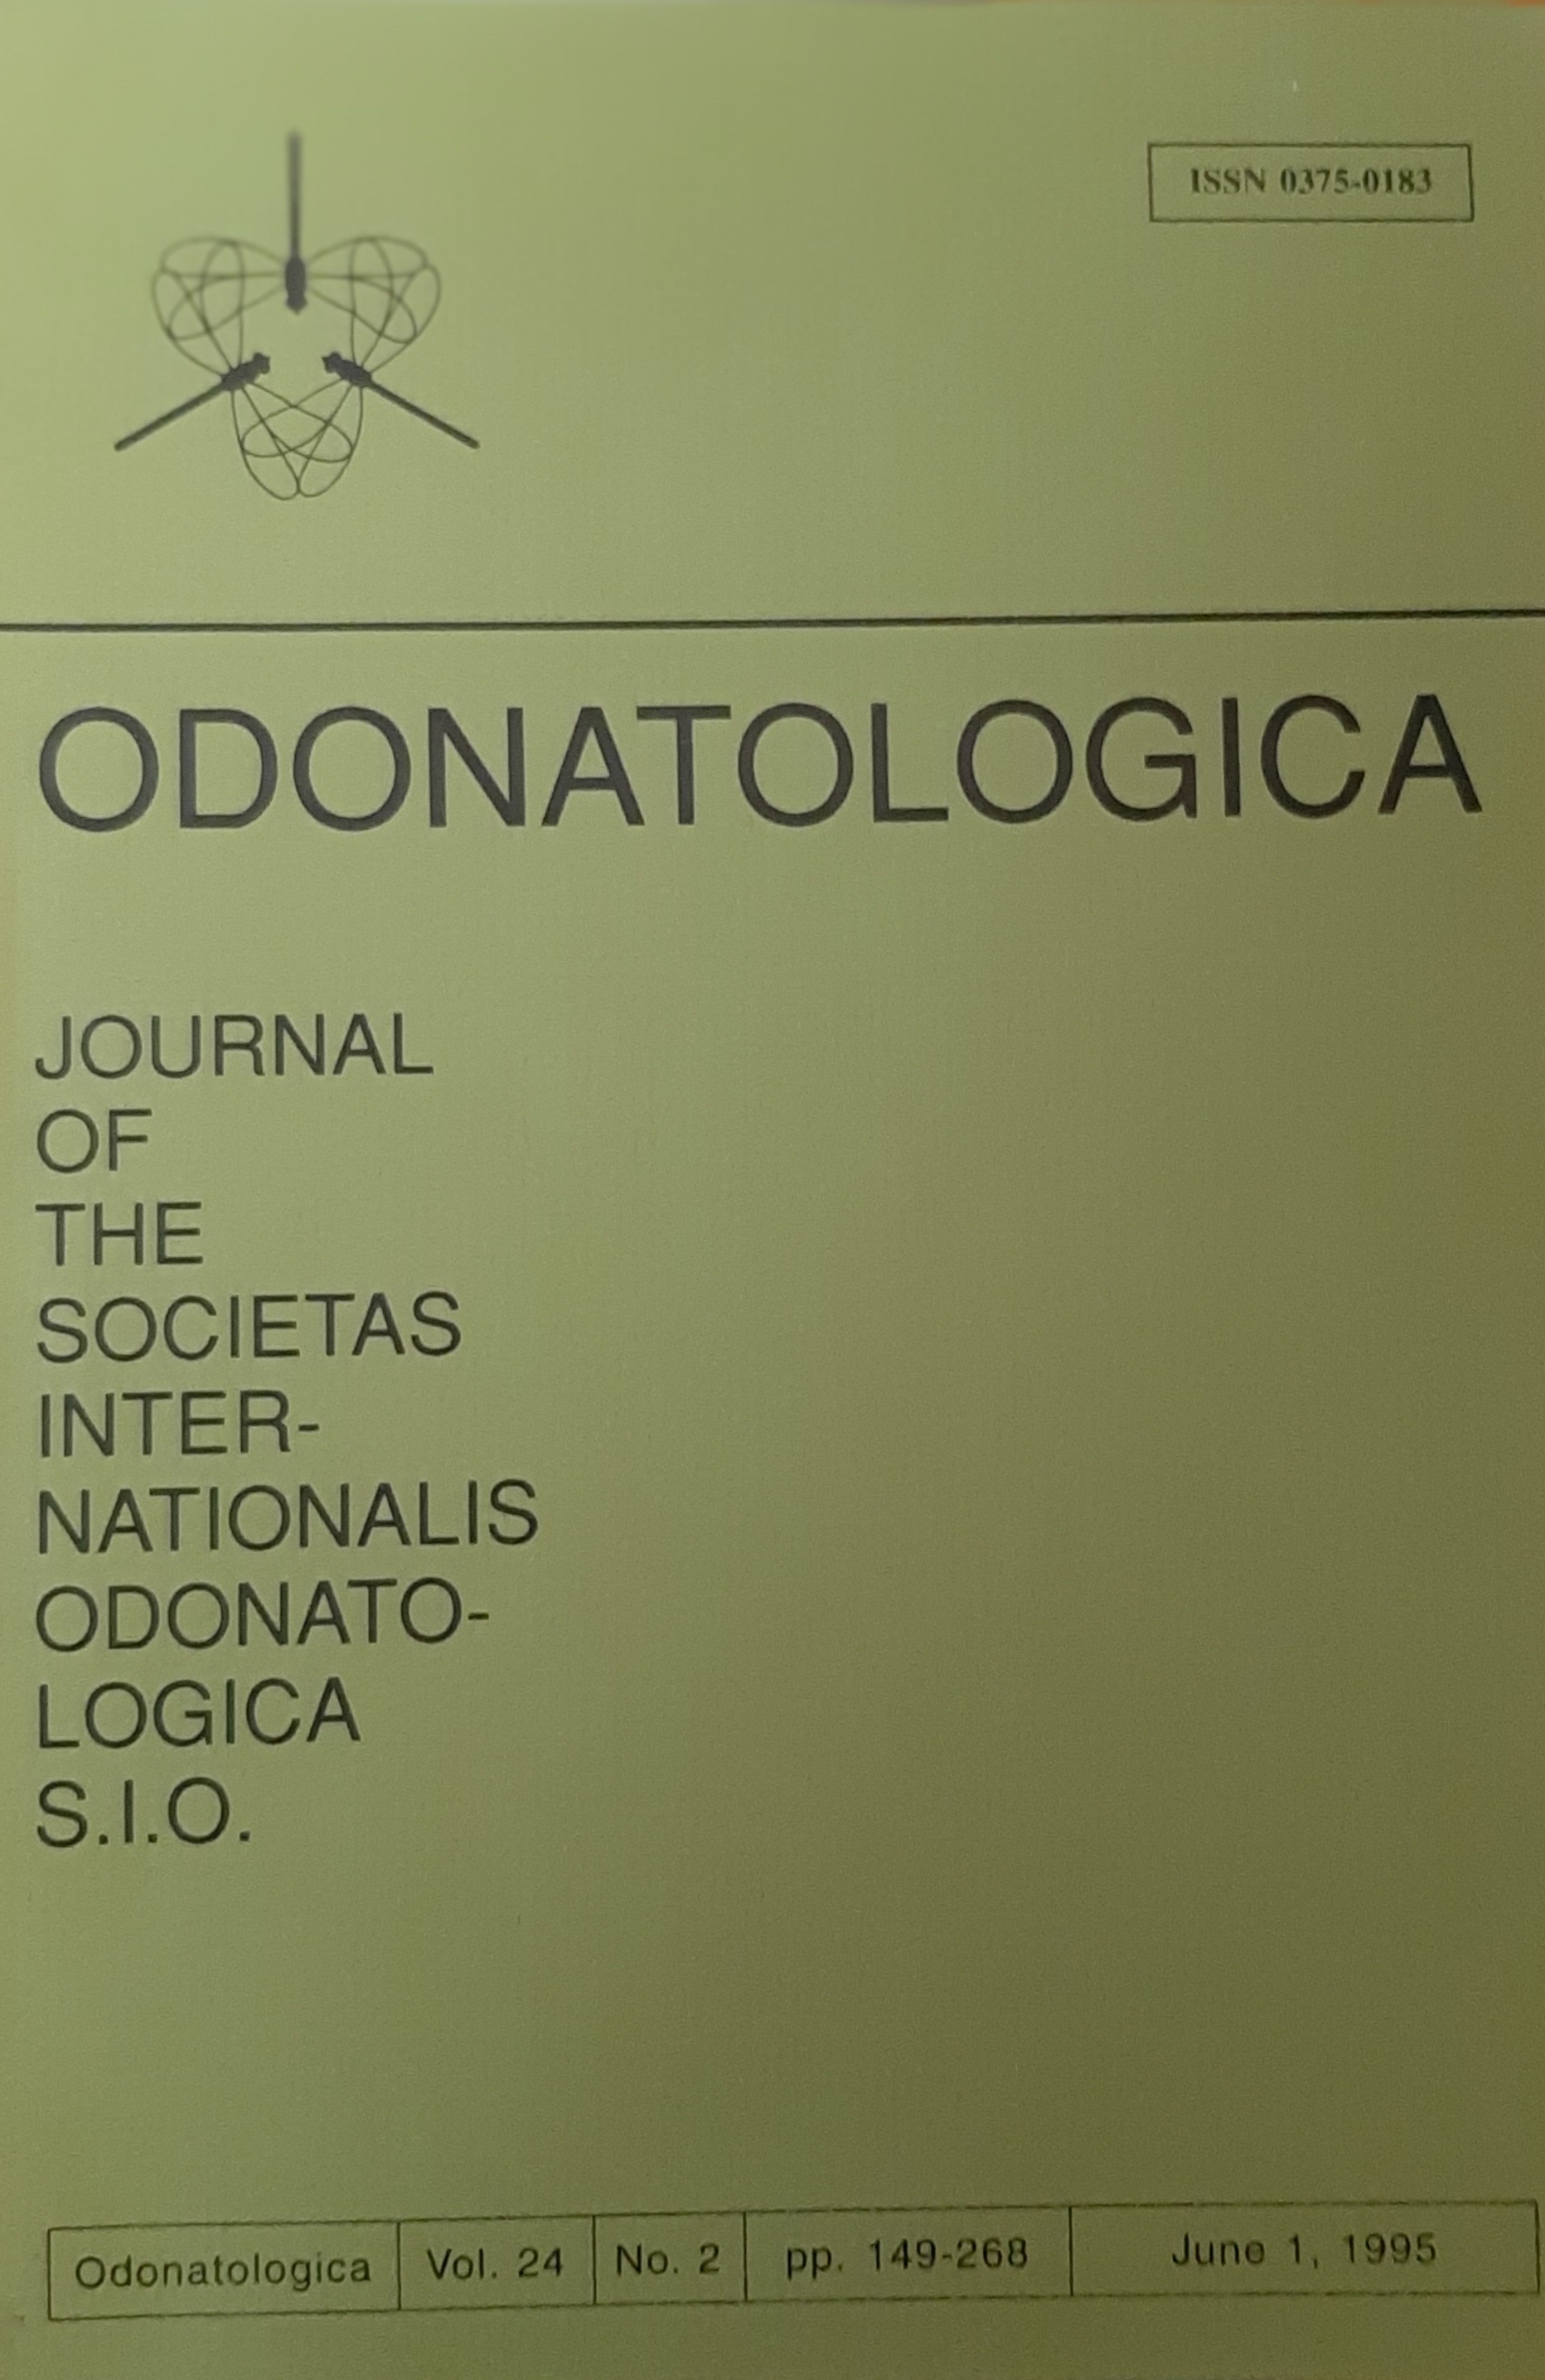 Odonatologica 1995/24. évf. 2. szám Journal of the Societas Internationalis Odonatologica S.I.O. (Rippl-Rónai Múzeum RR-F)